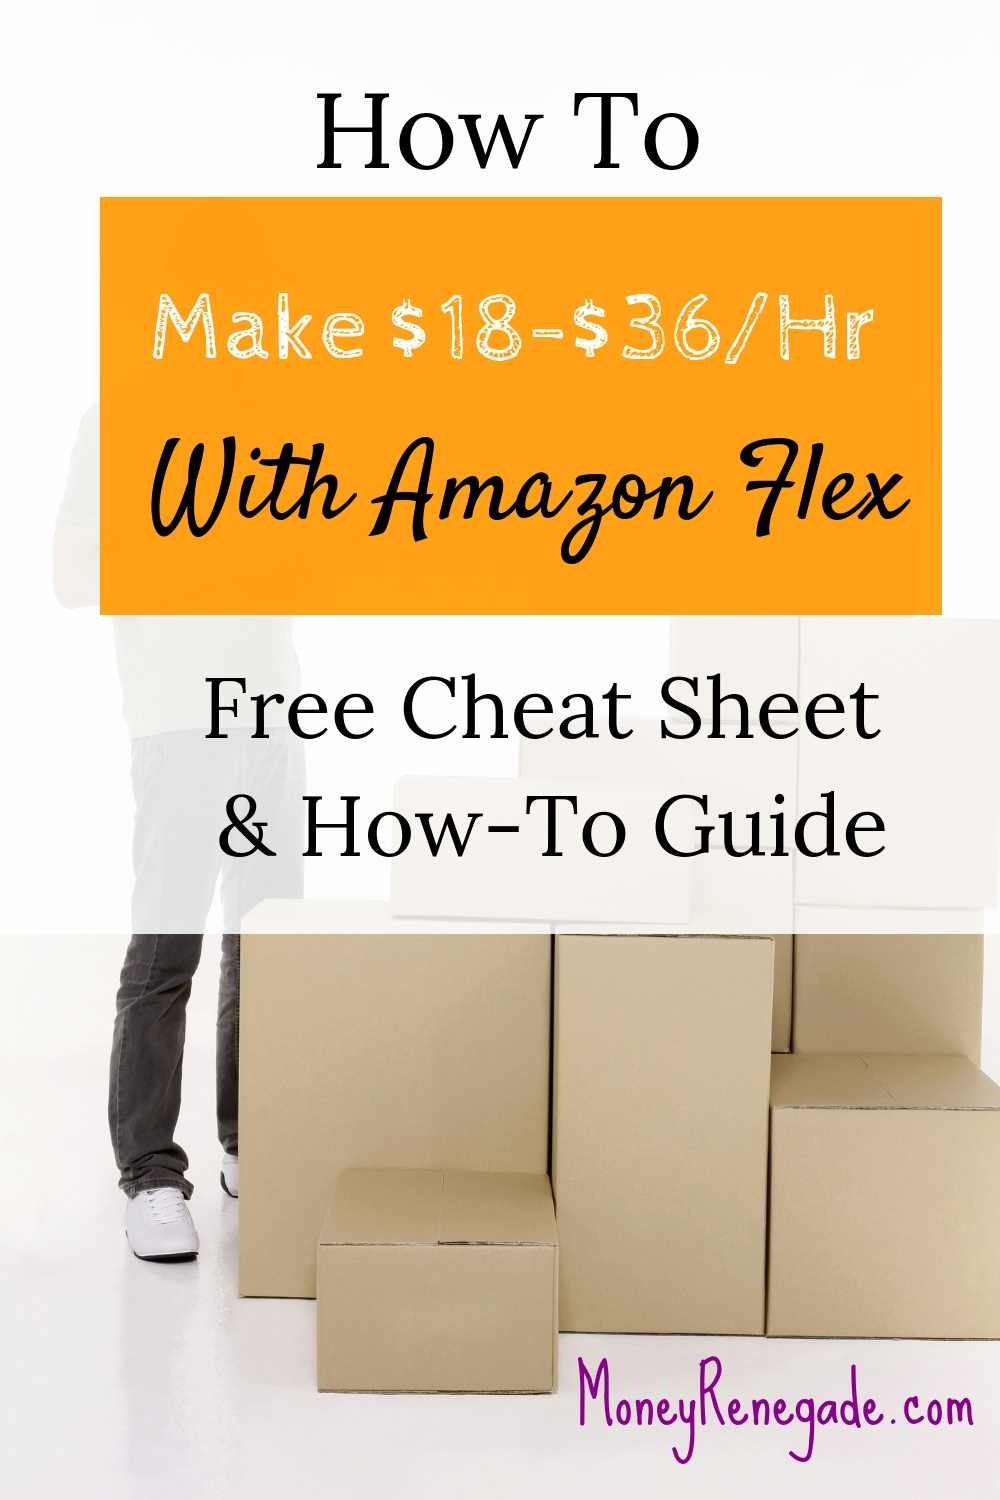 How to Make $18-$36/hour Amazon Flex Guide & Cheat Sheet